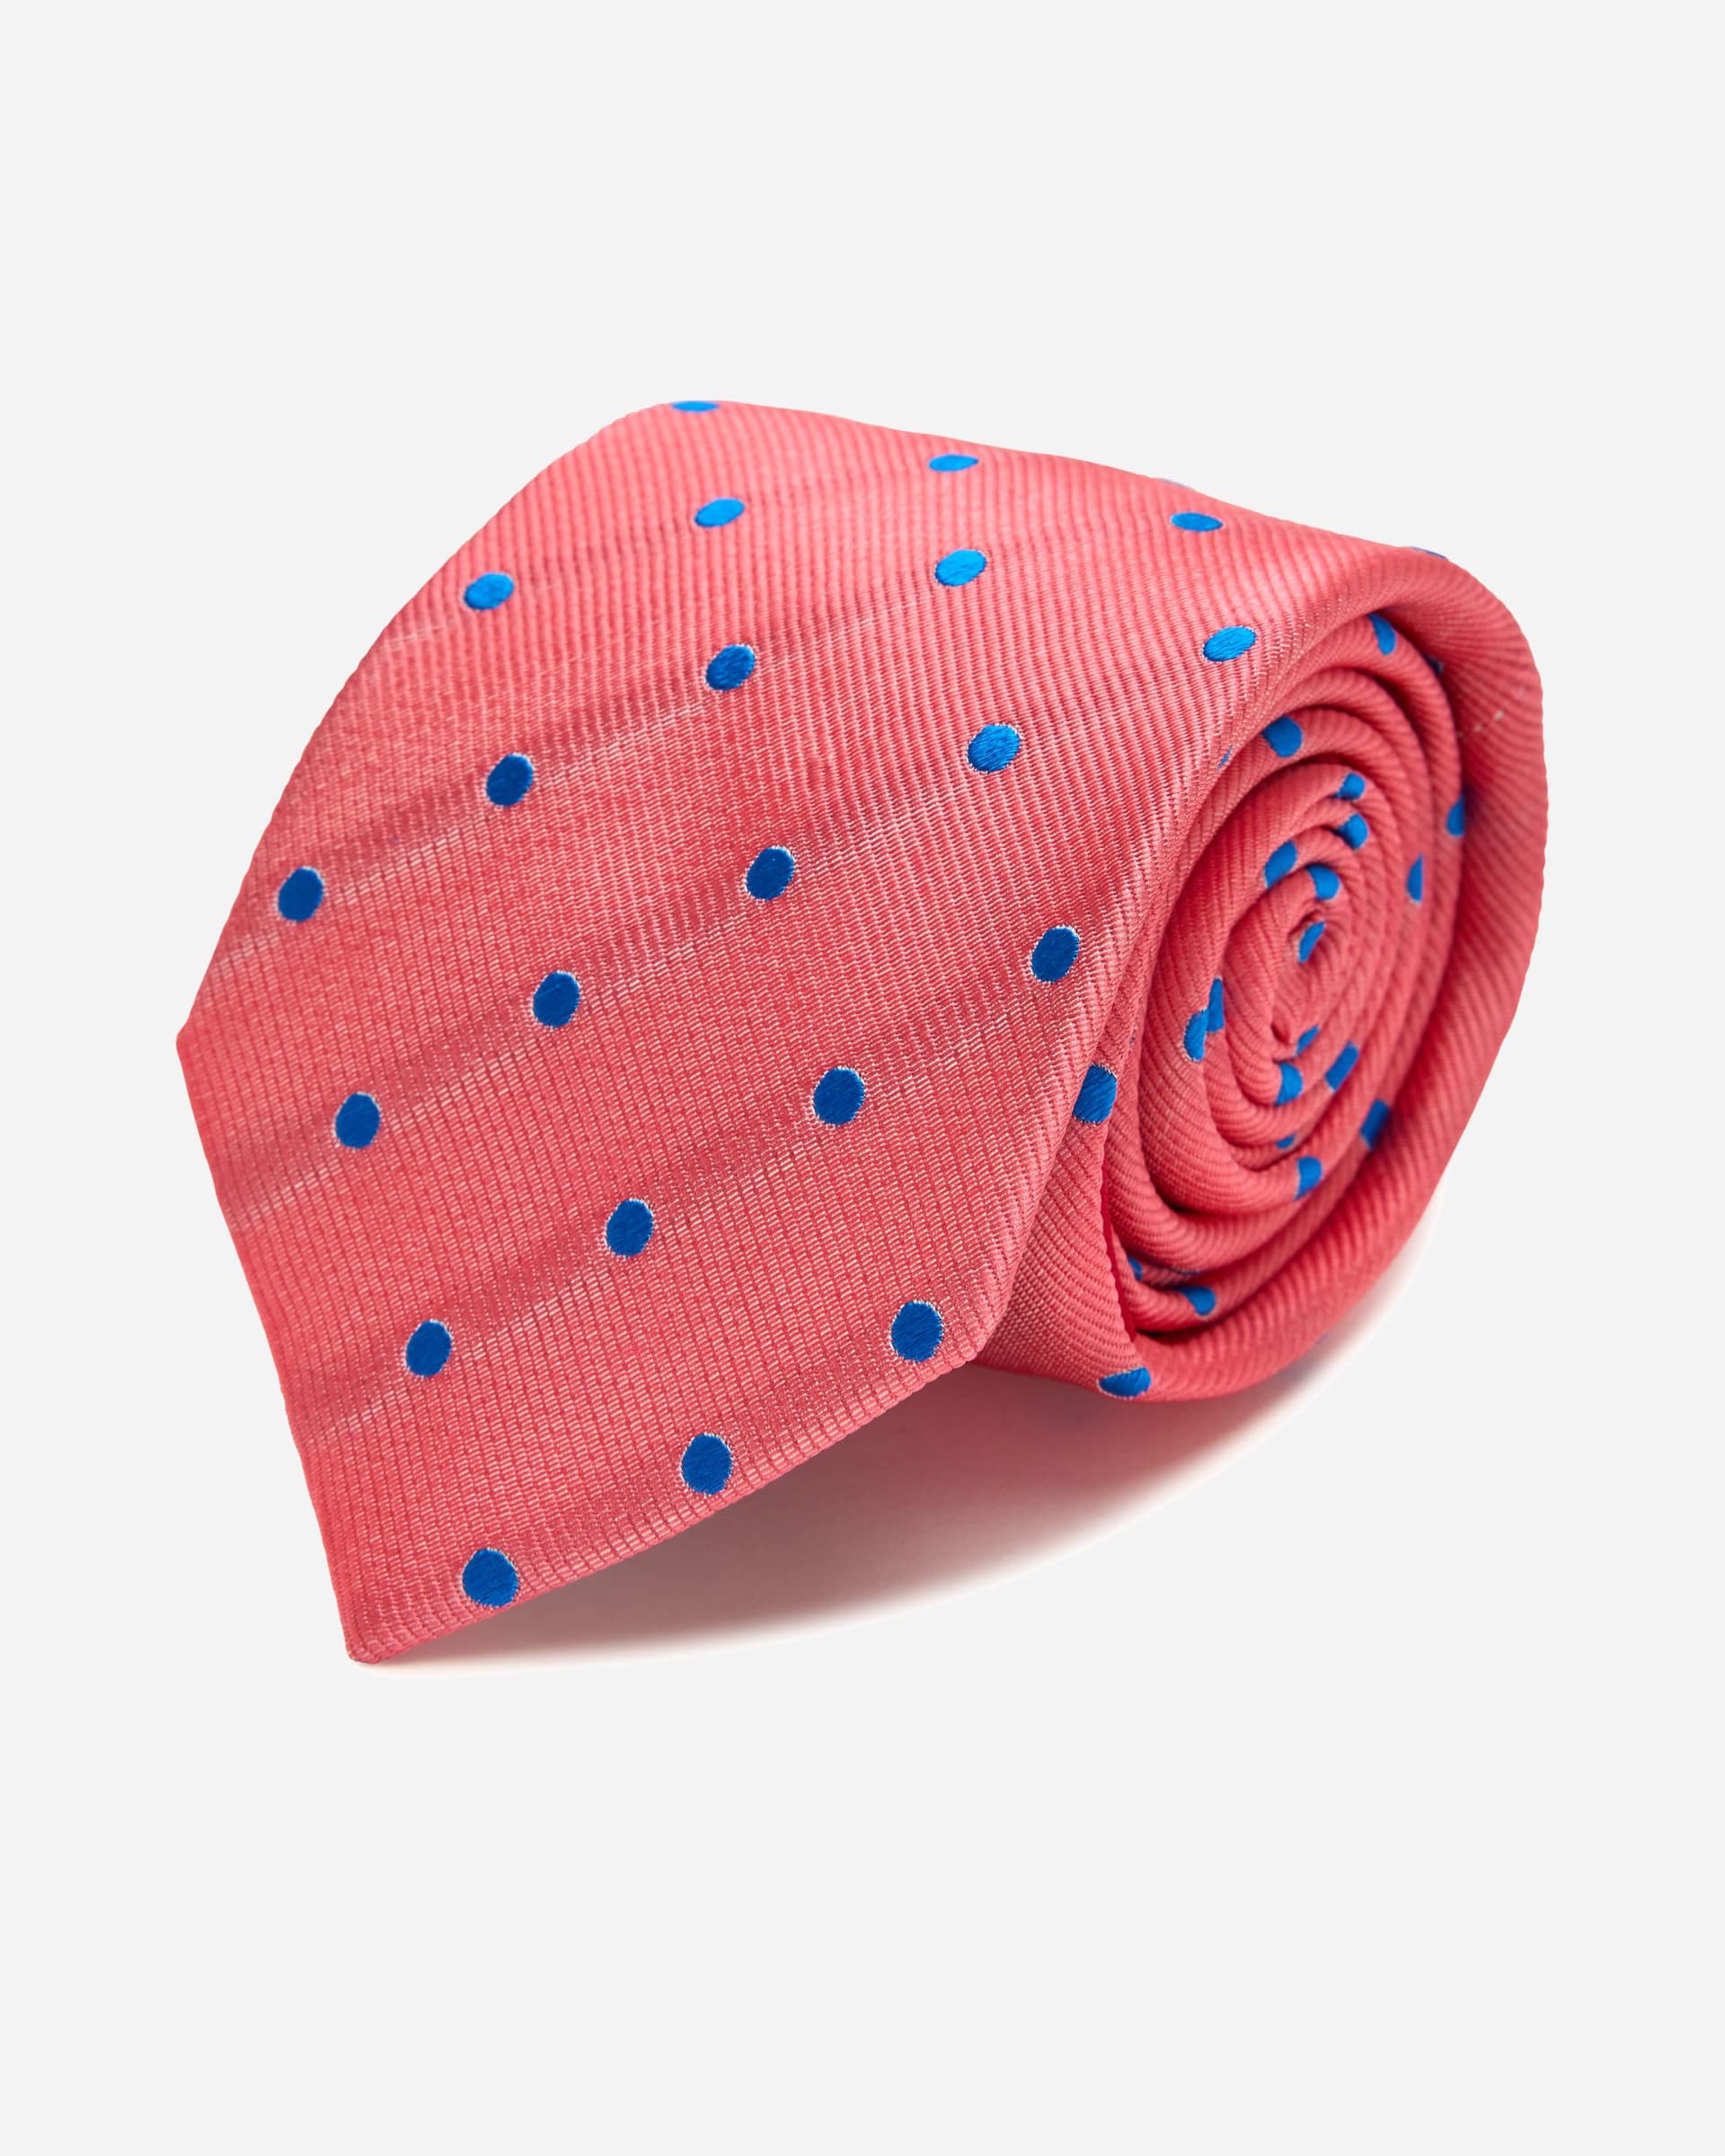 Vista Pink Silk Tie - Men's Ties at Menzclub